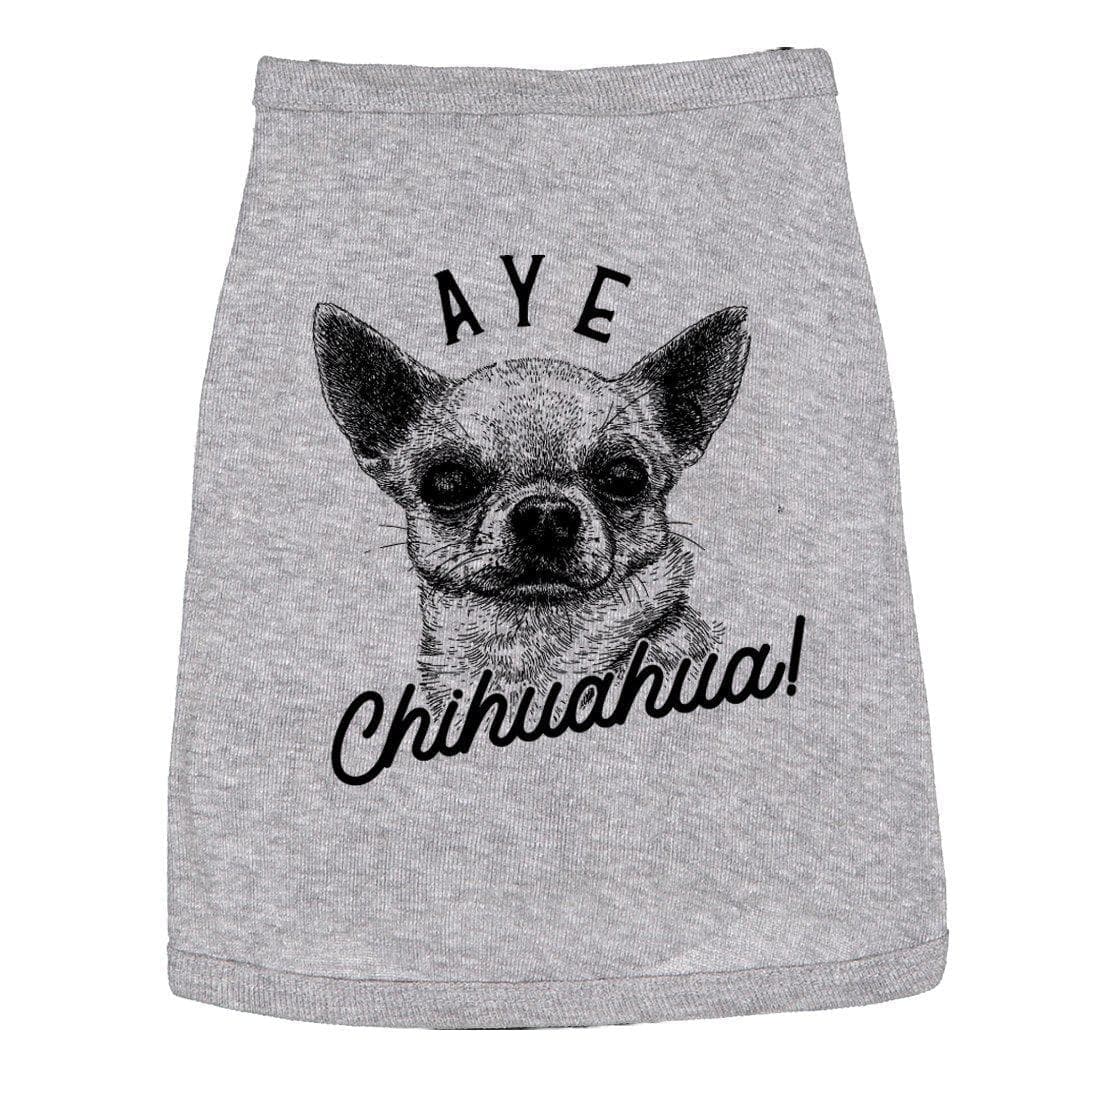 Aye Chihuahua Dog Shirt - Crazy Dog T-Shirts